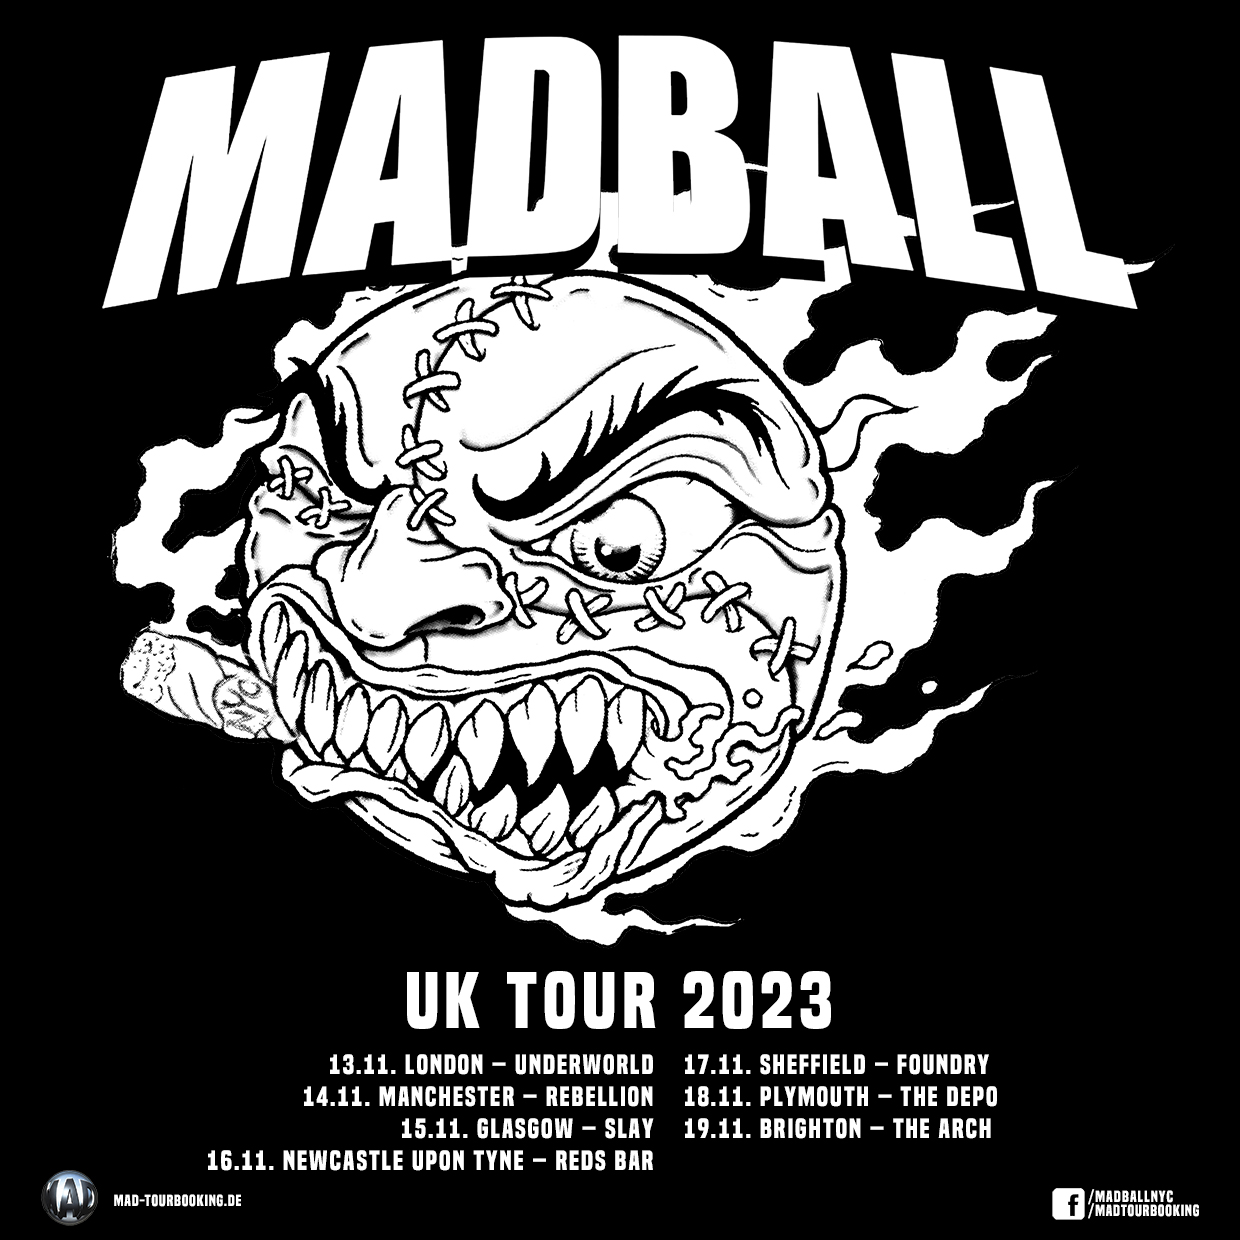 madball tour 2023 tickets